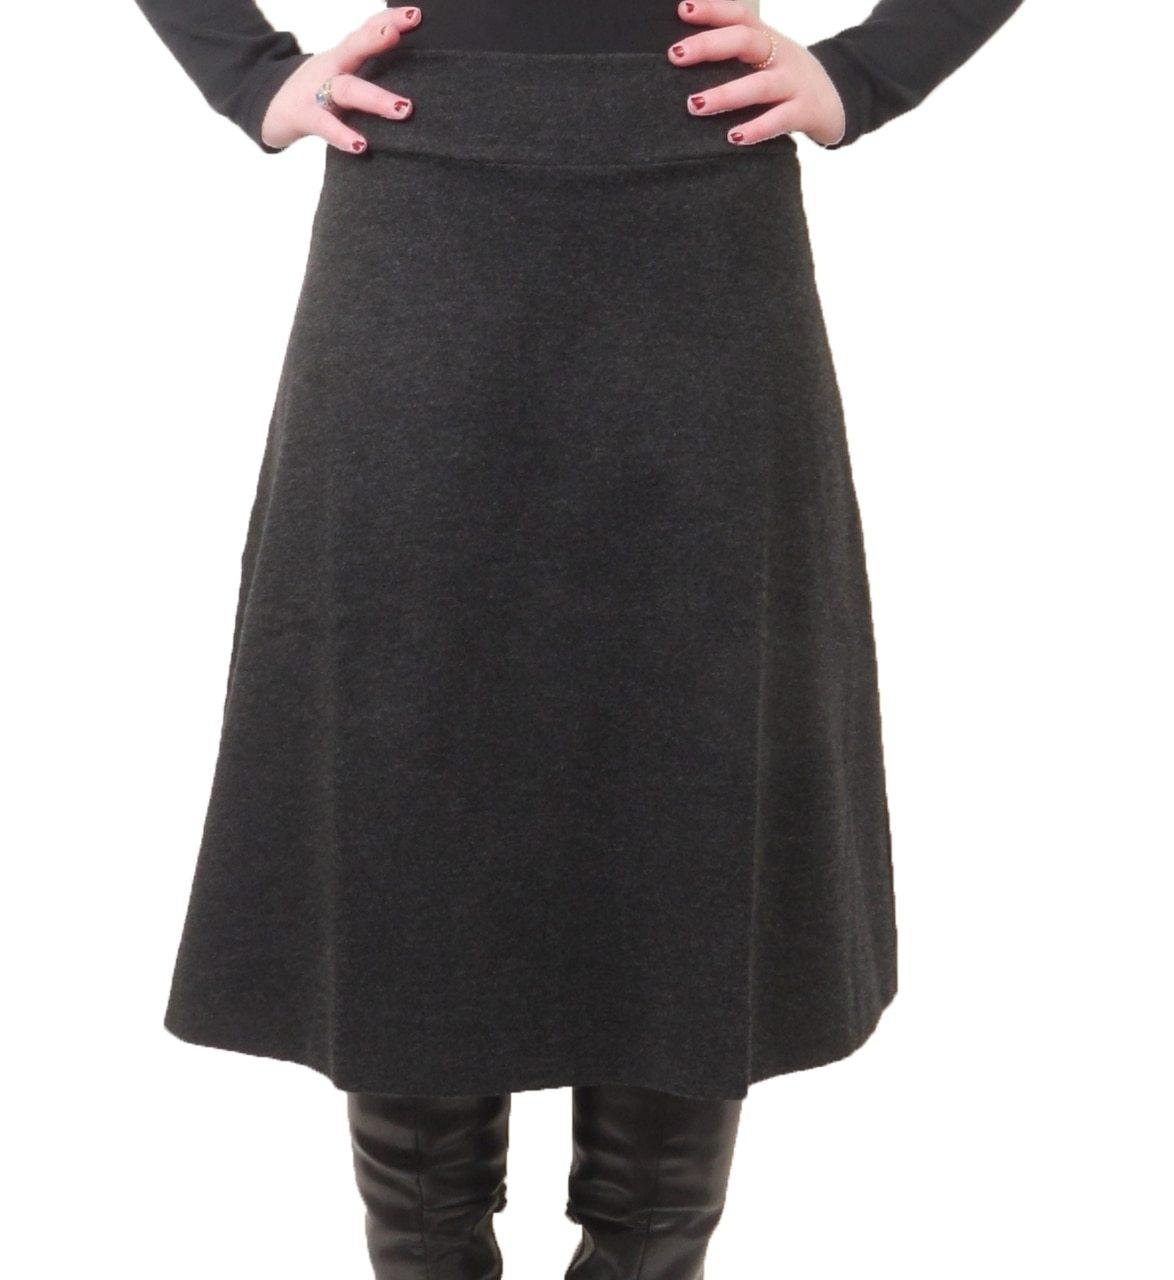 Wear and Flair Charcoal Skirt (7085) Wear & Flair